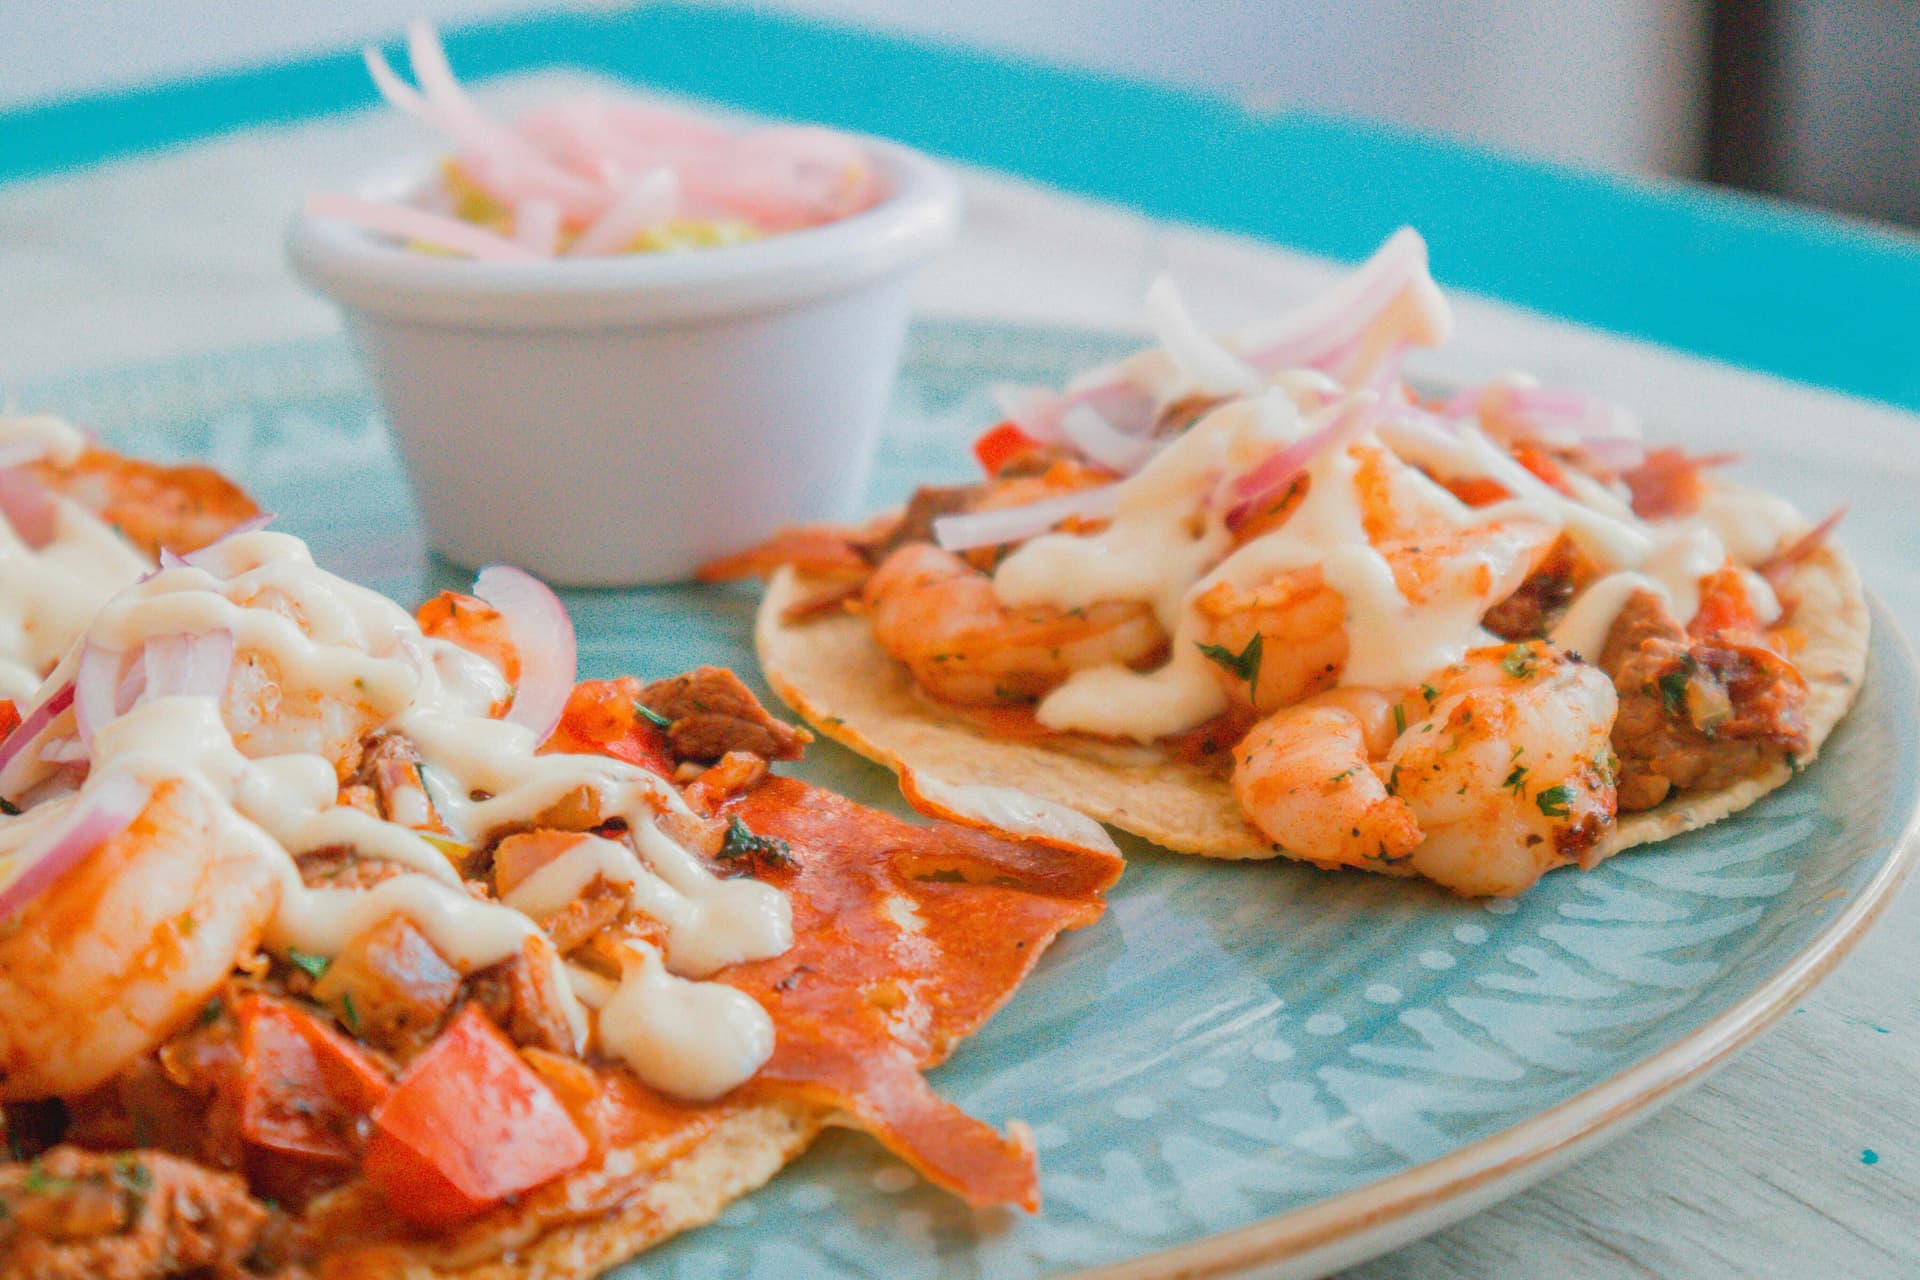 Tipsy Tacos: Margarita-Marinated Shrimp Tacos with a Zesty Lime Crema